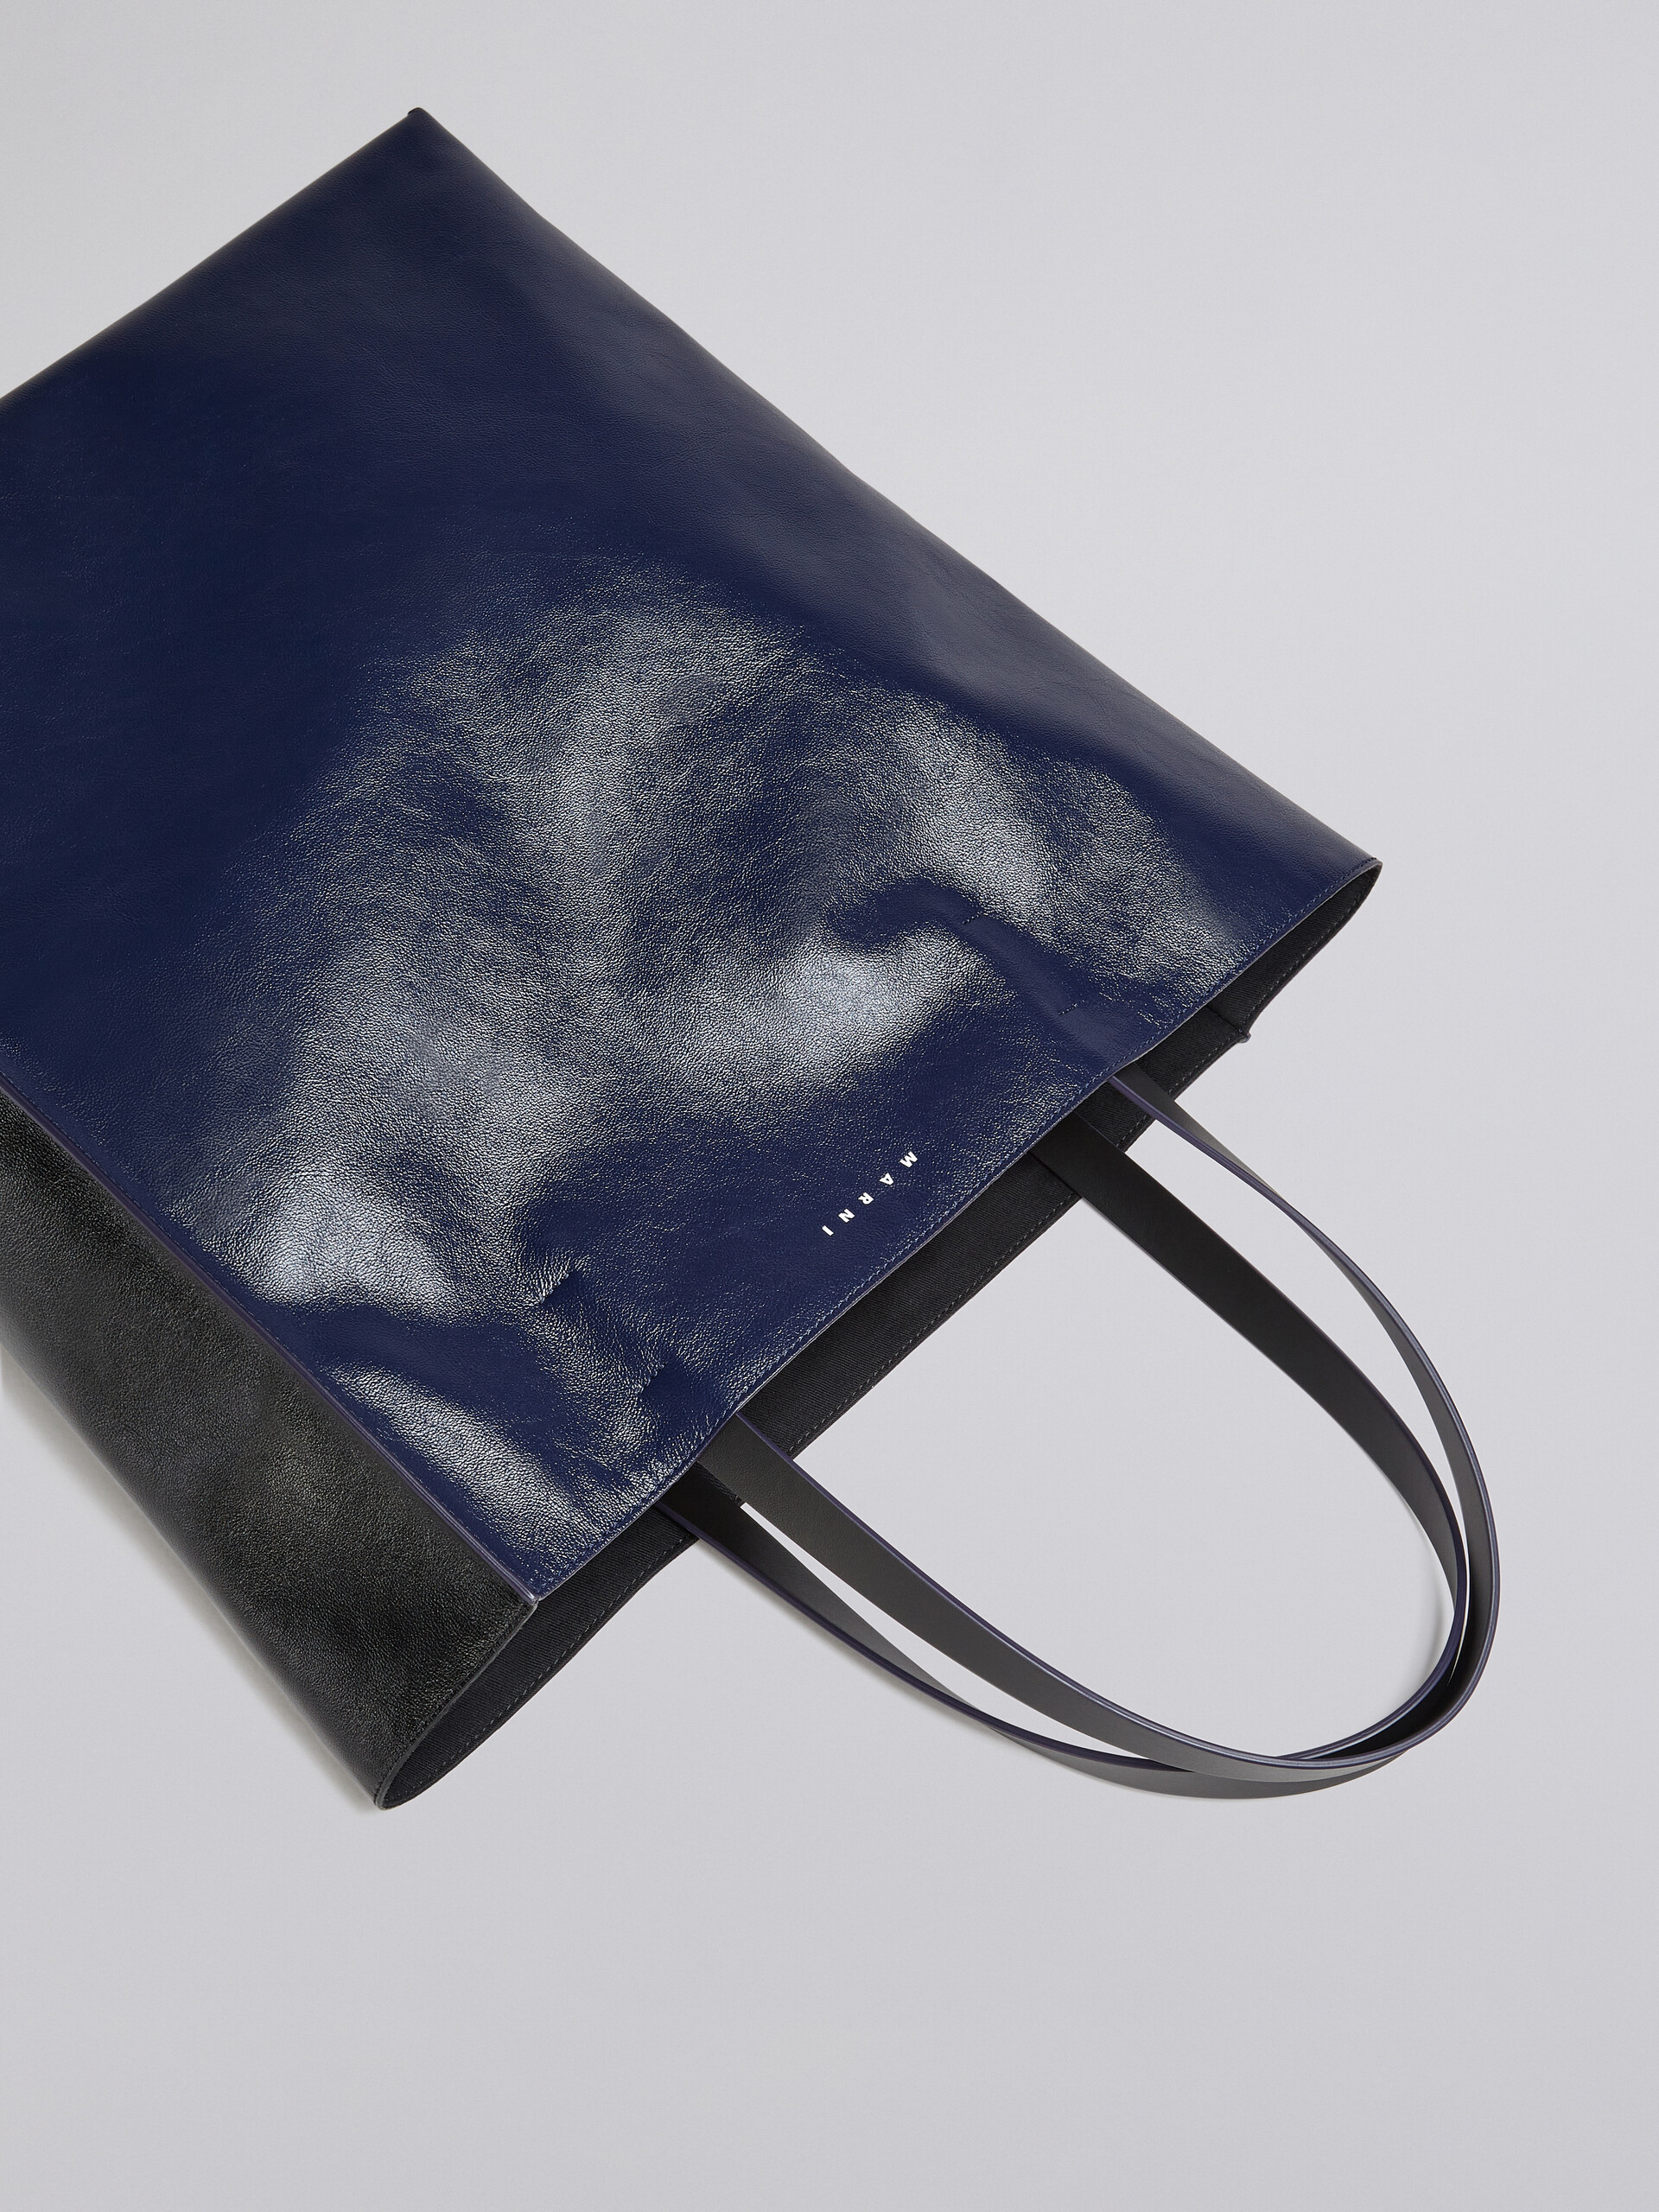 MUSEO SOFT bag grande in pelle lucida blu e nera - Borse shopping - Image 5